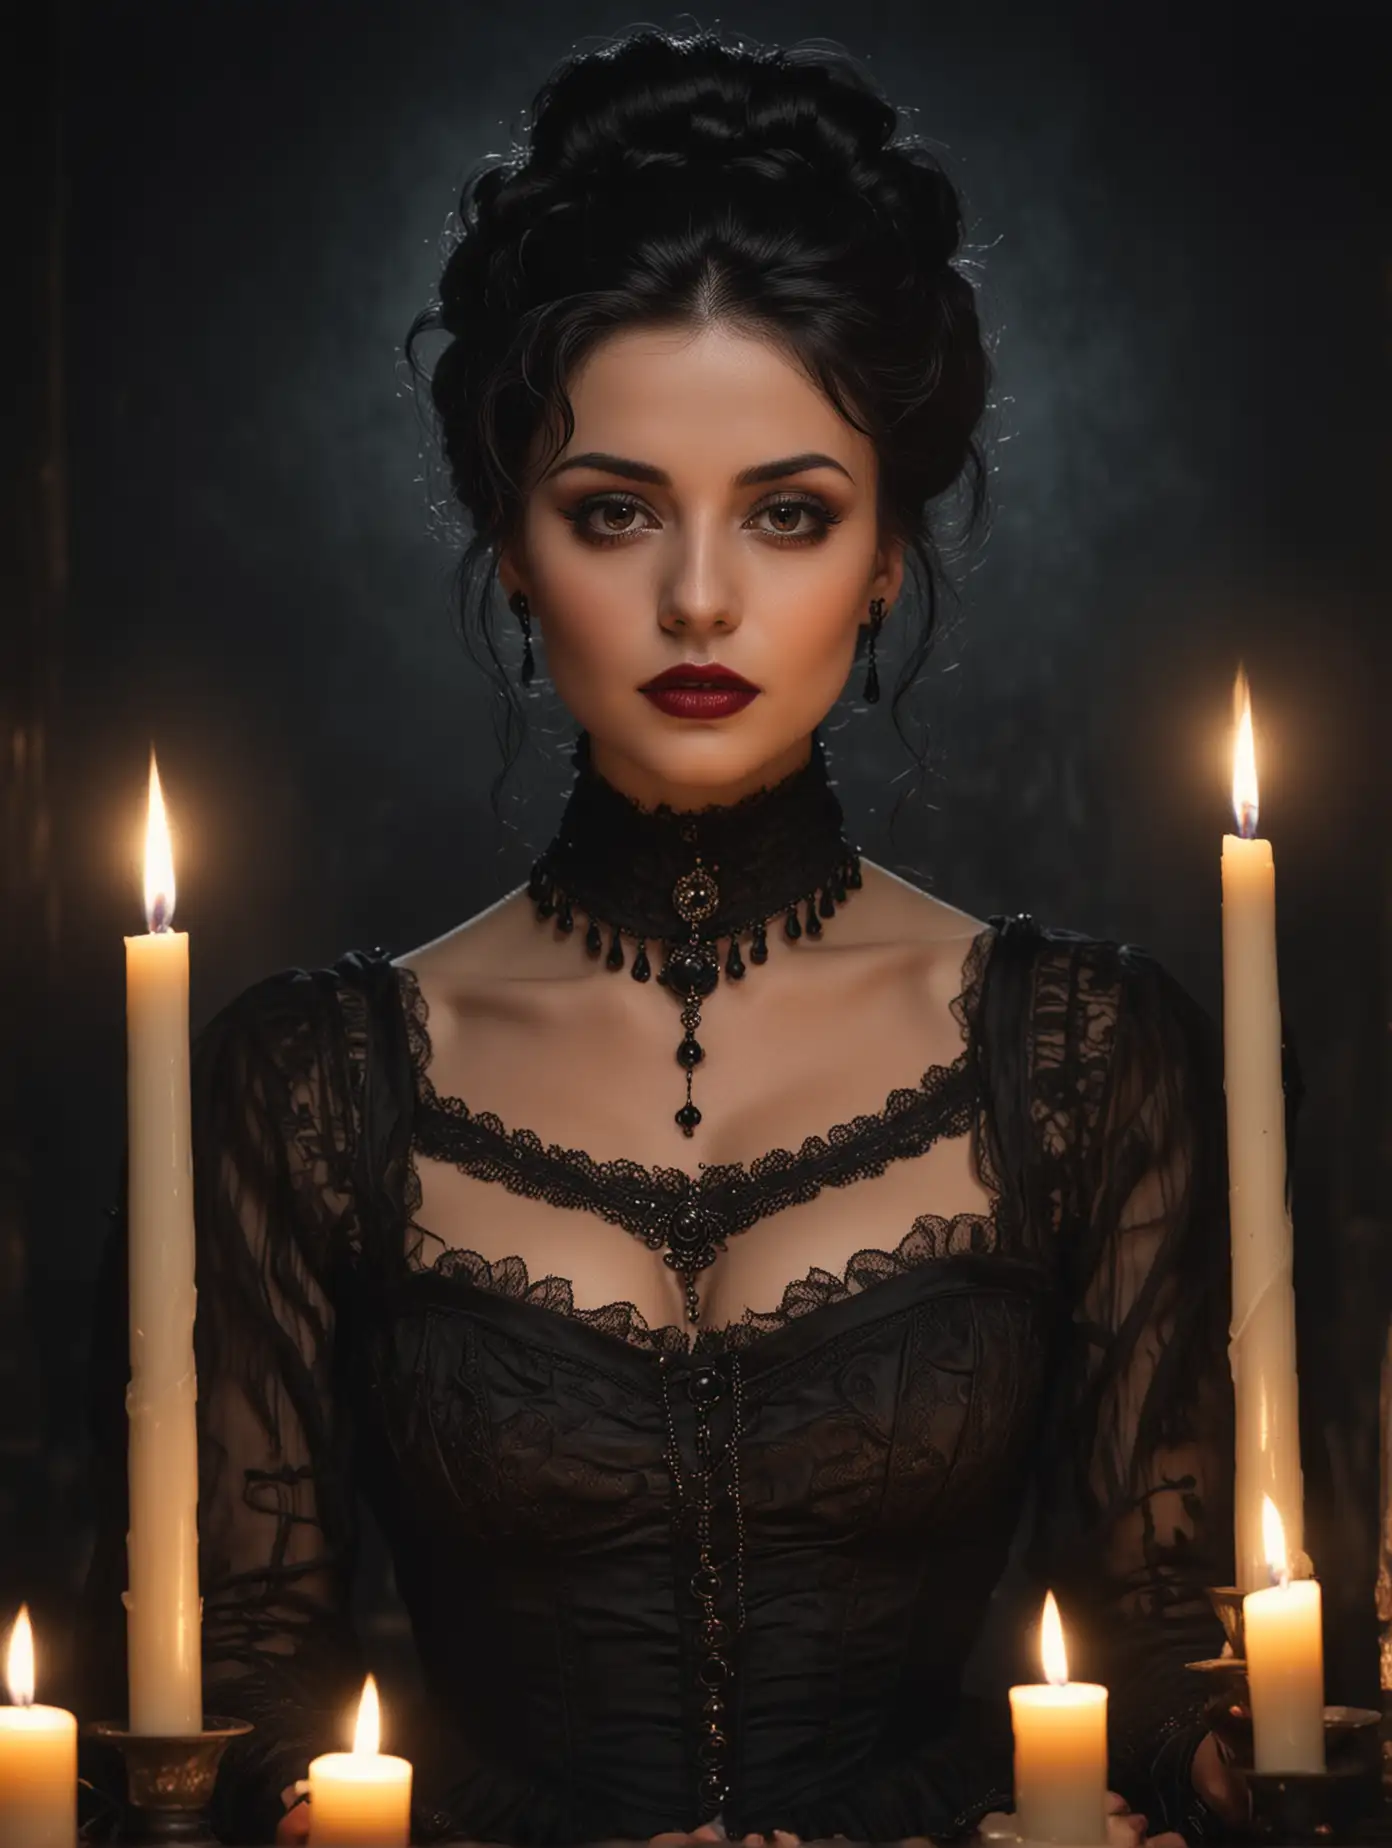 Beautiful gothic Victorian era woman portrait, small nose, full lips, black hair in voluminous updo, dark jewelry, lit candles surrounding her